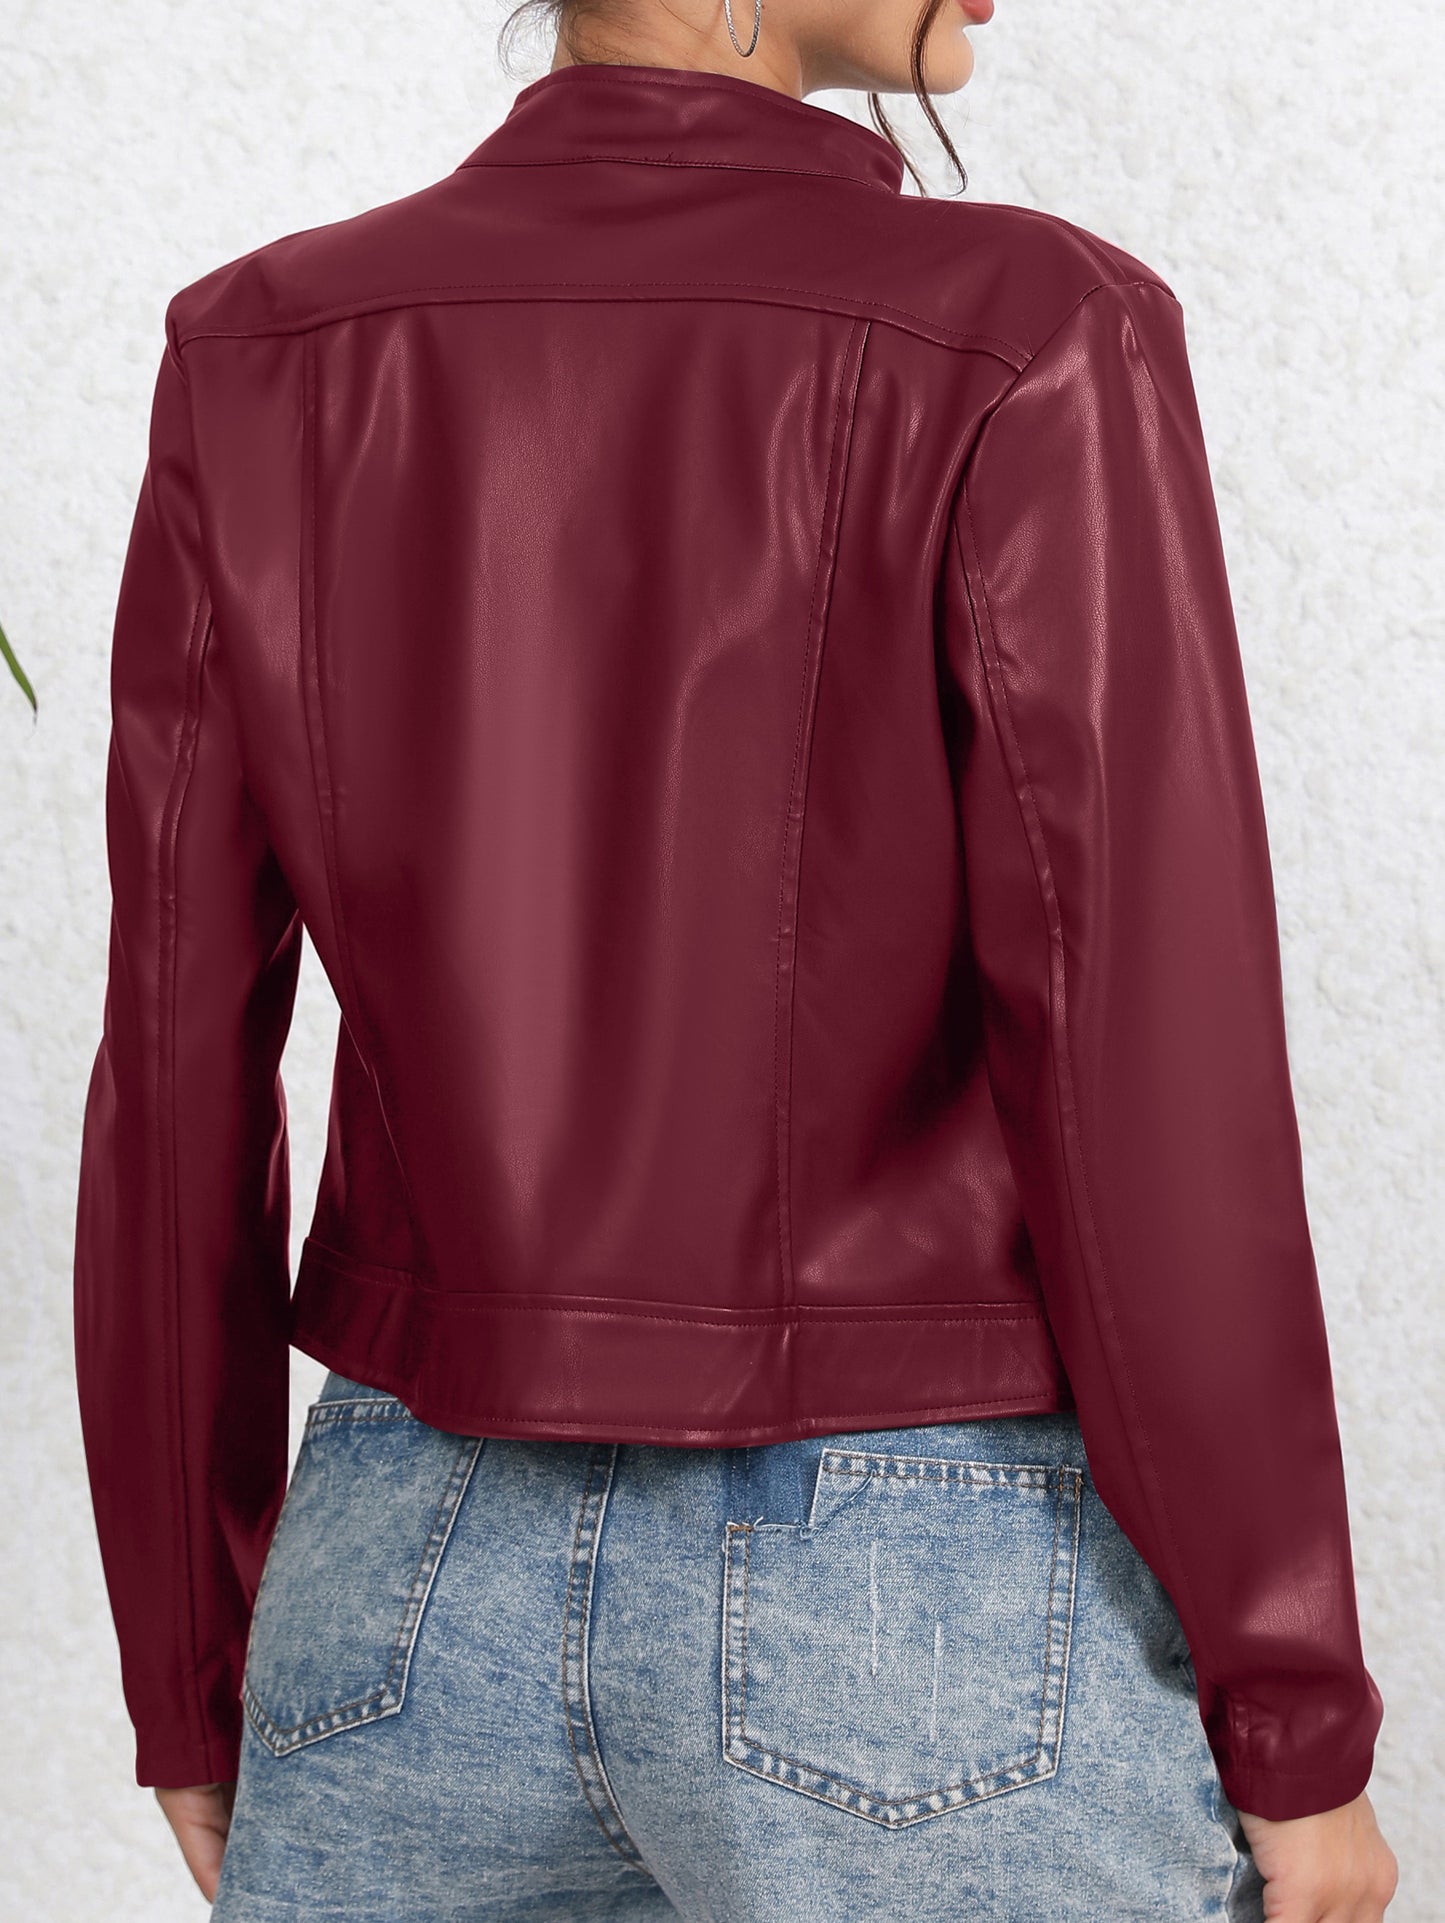 Vzyzv Faux Leather Zip Up Jacket, Biker Long Sleeve Jacket For Fall & Winter, Women's Clothing